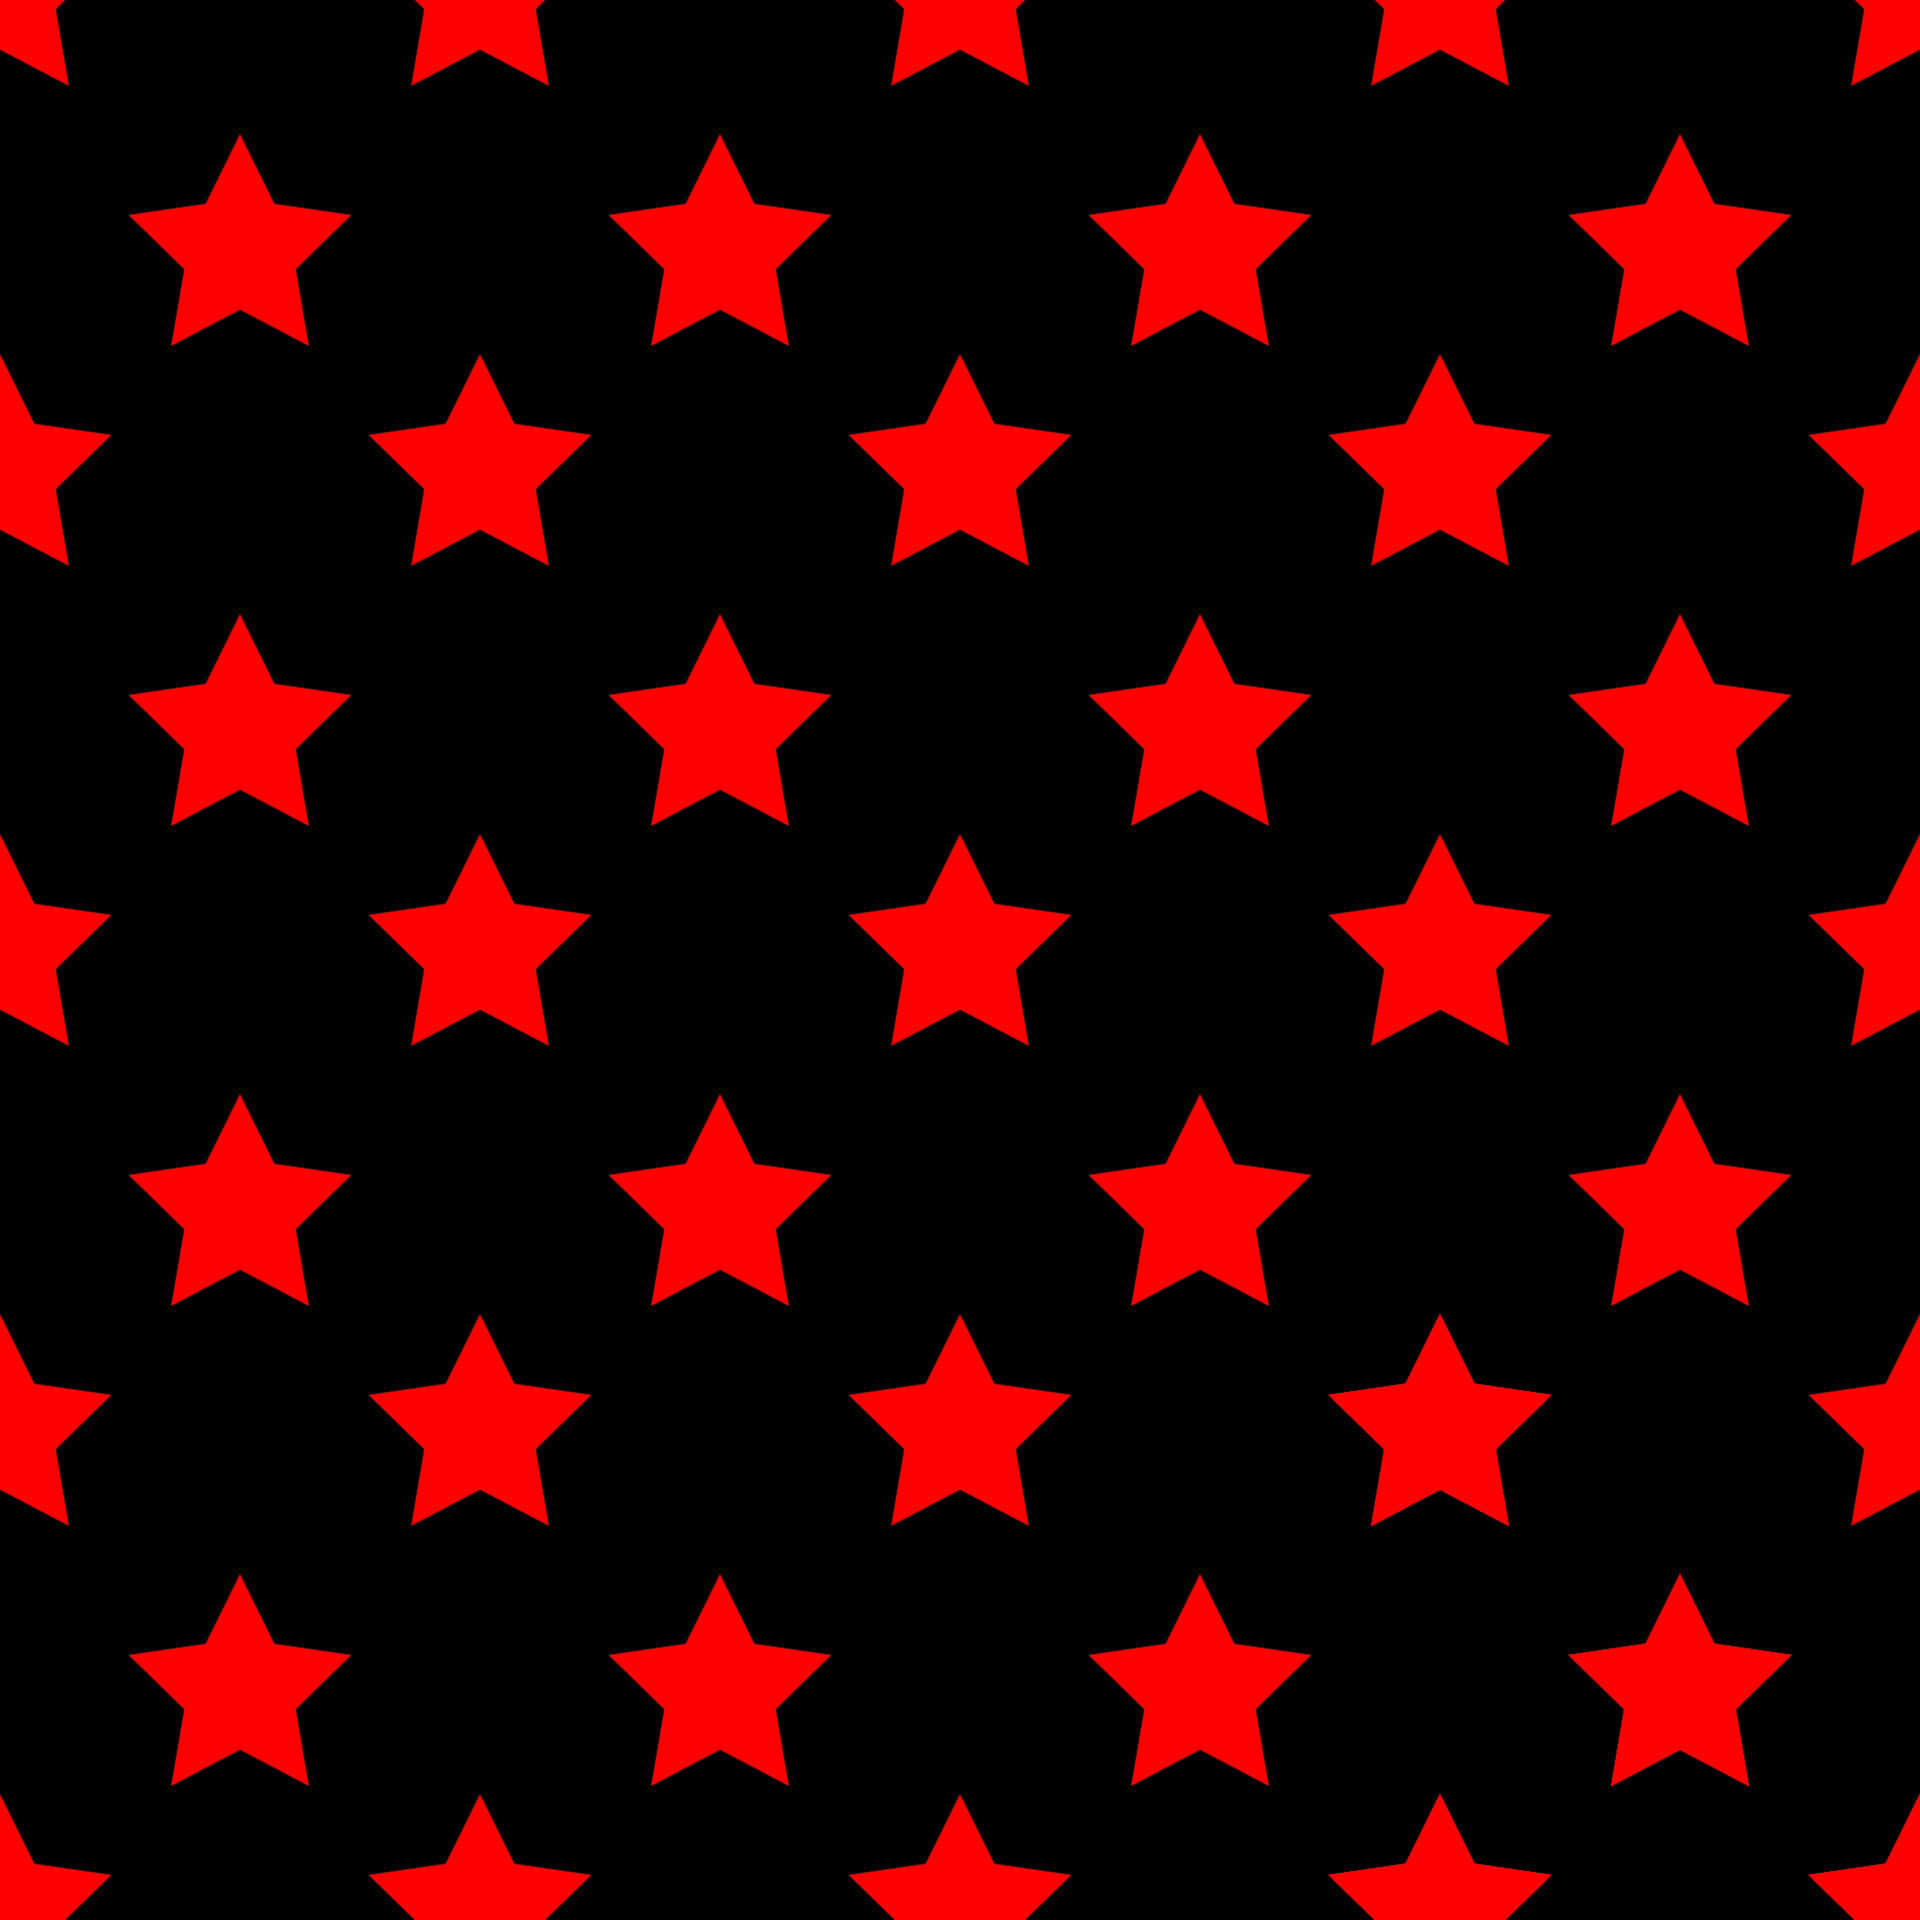 Shining Red Star on a Striking Dark Background